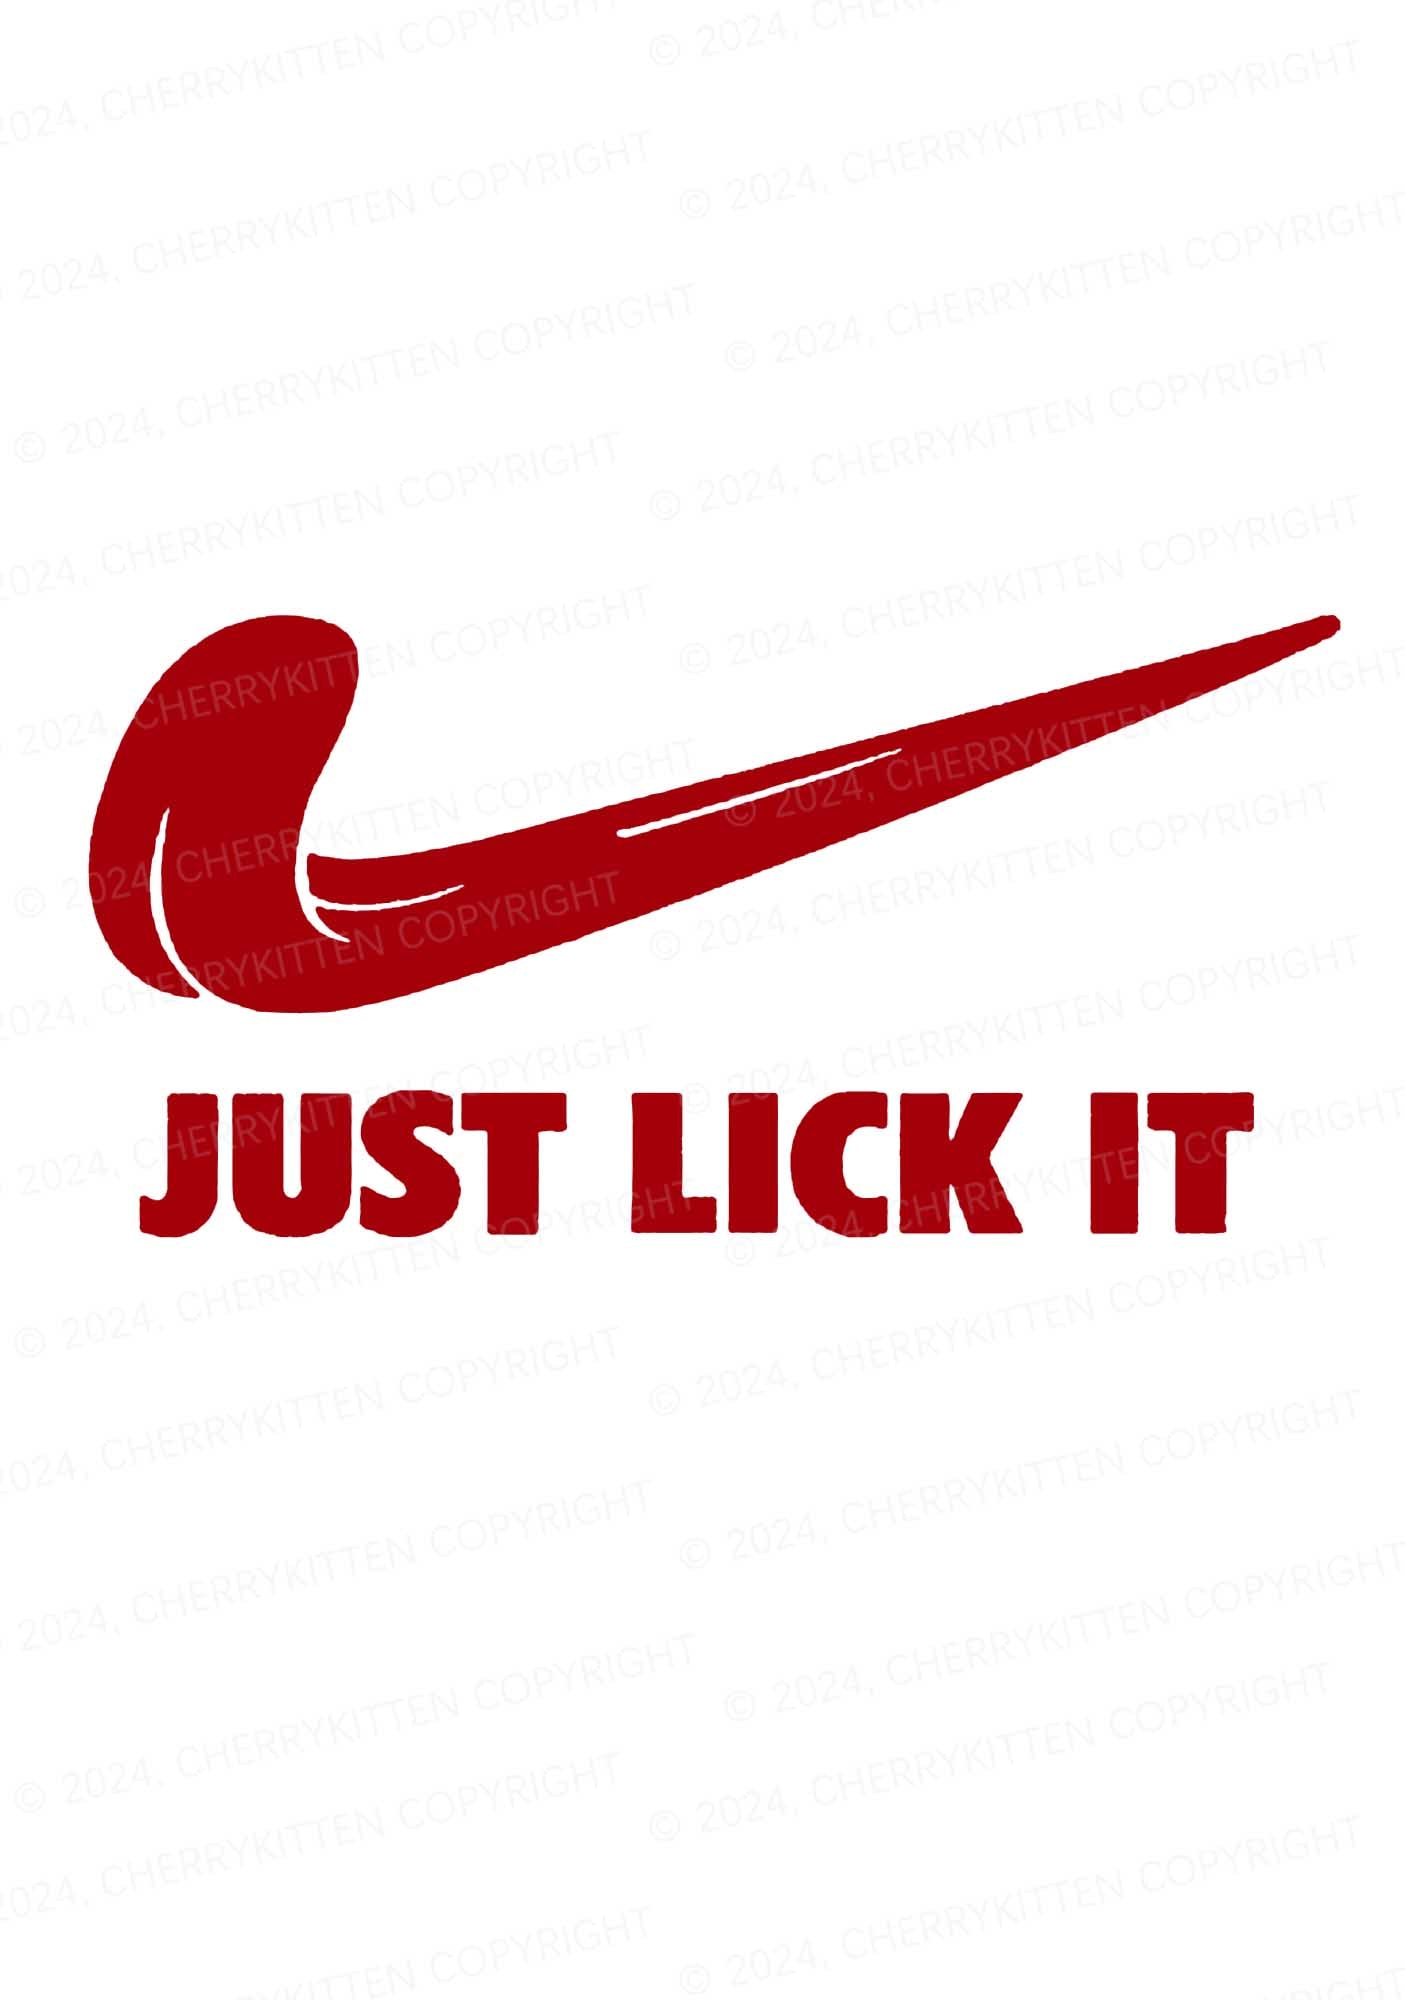 Just Lick It Y2K Flat String Thong Cherrykitten